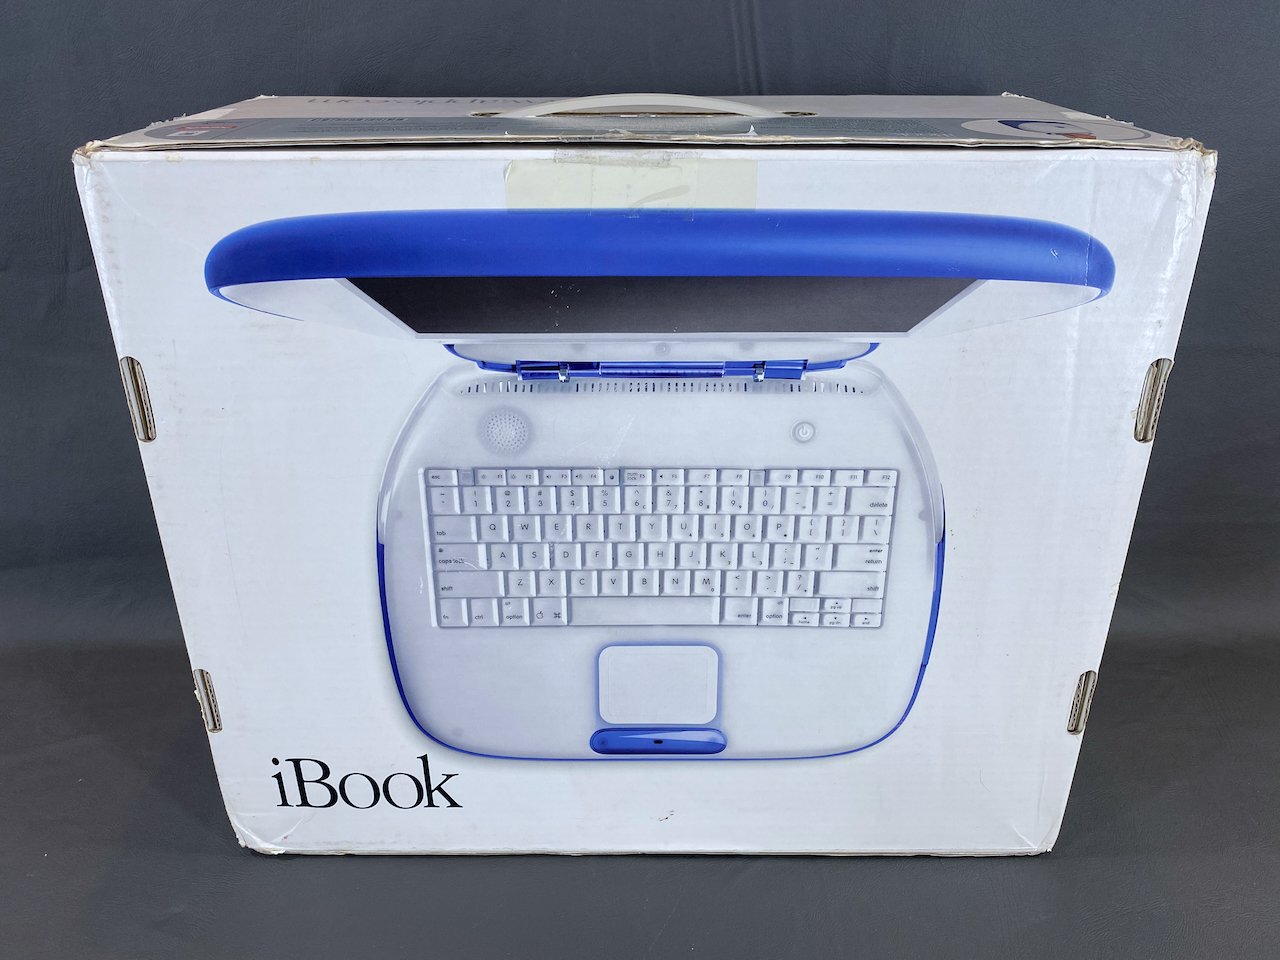 APPLE iBook IBOOK M7721J/A INDIGO